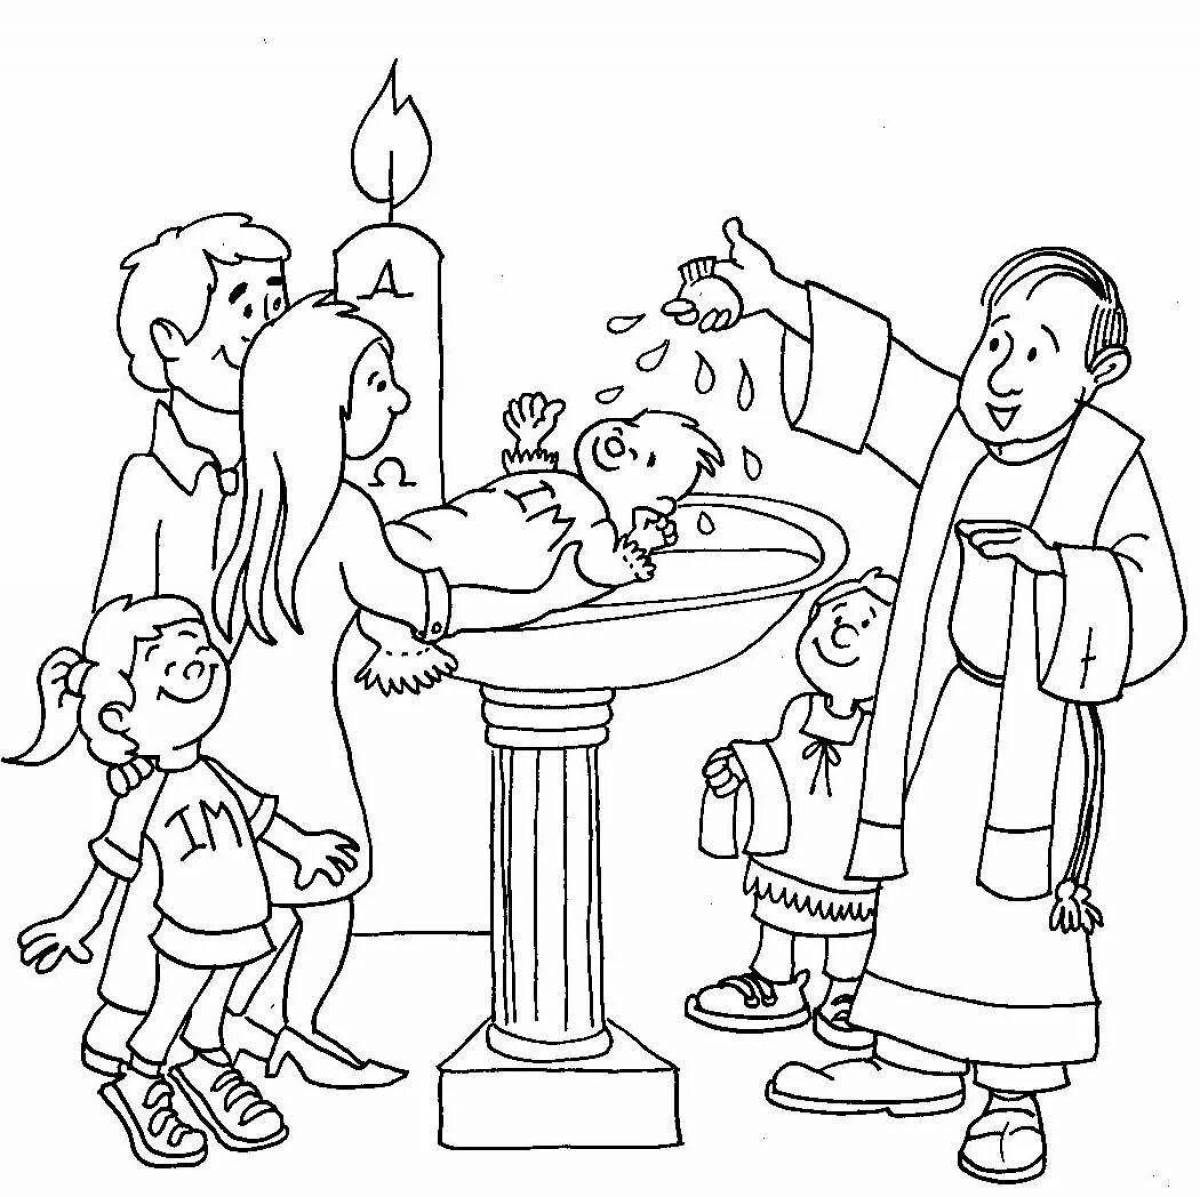 Rampant baptism coloring page